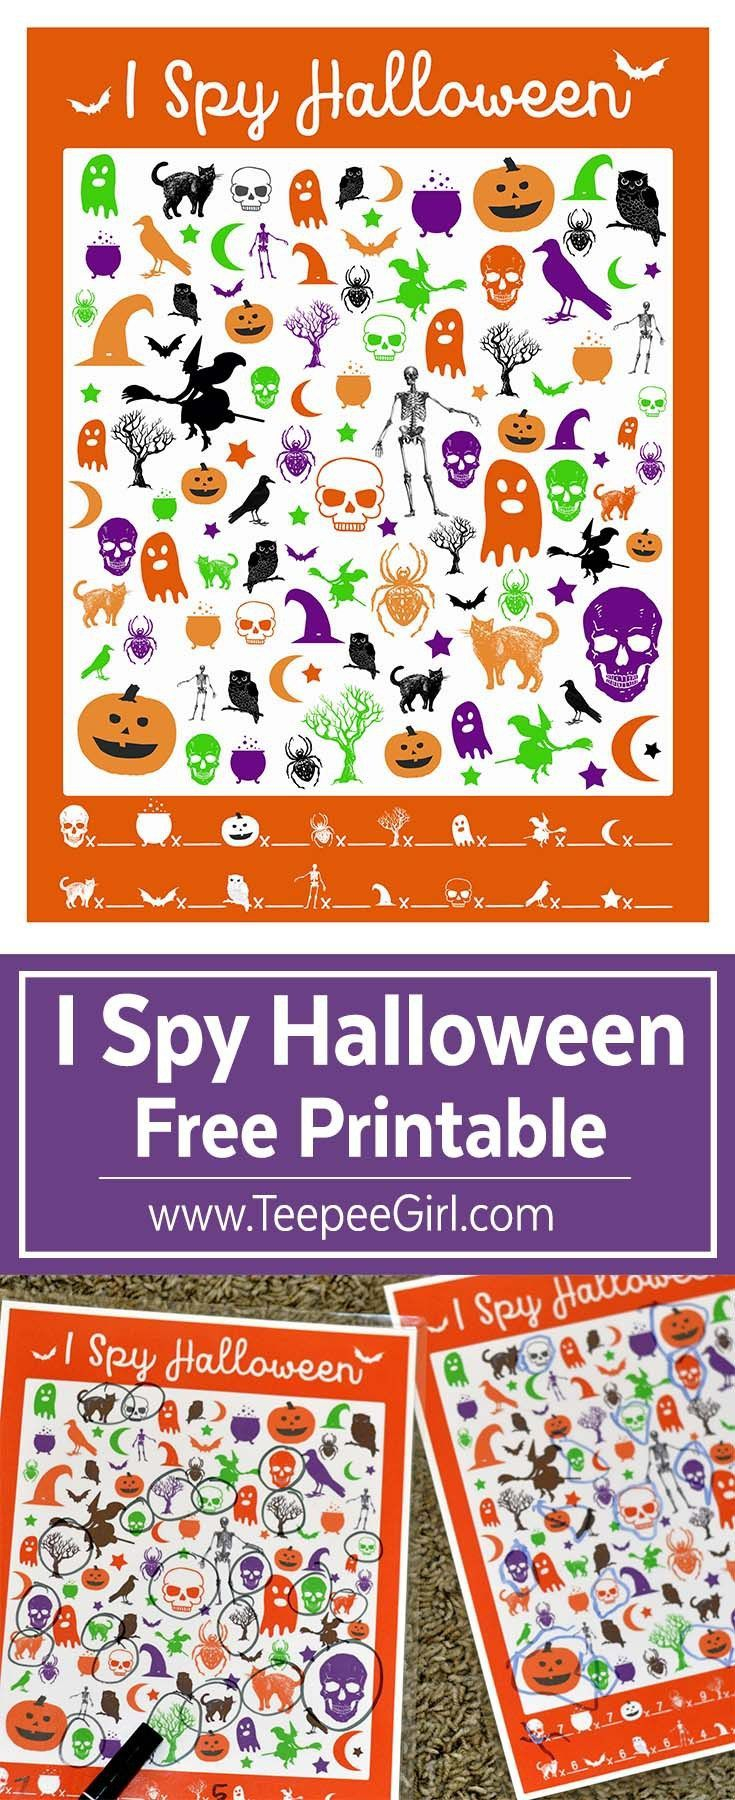 Free I Spy Halloween Printable Game | School Halloween Party